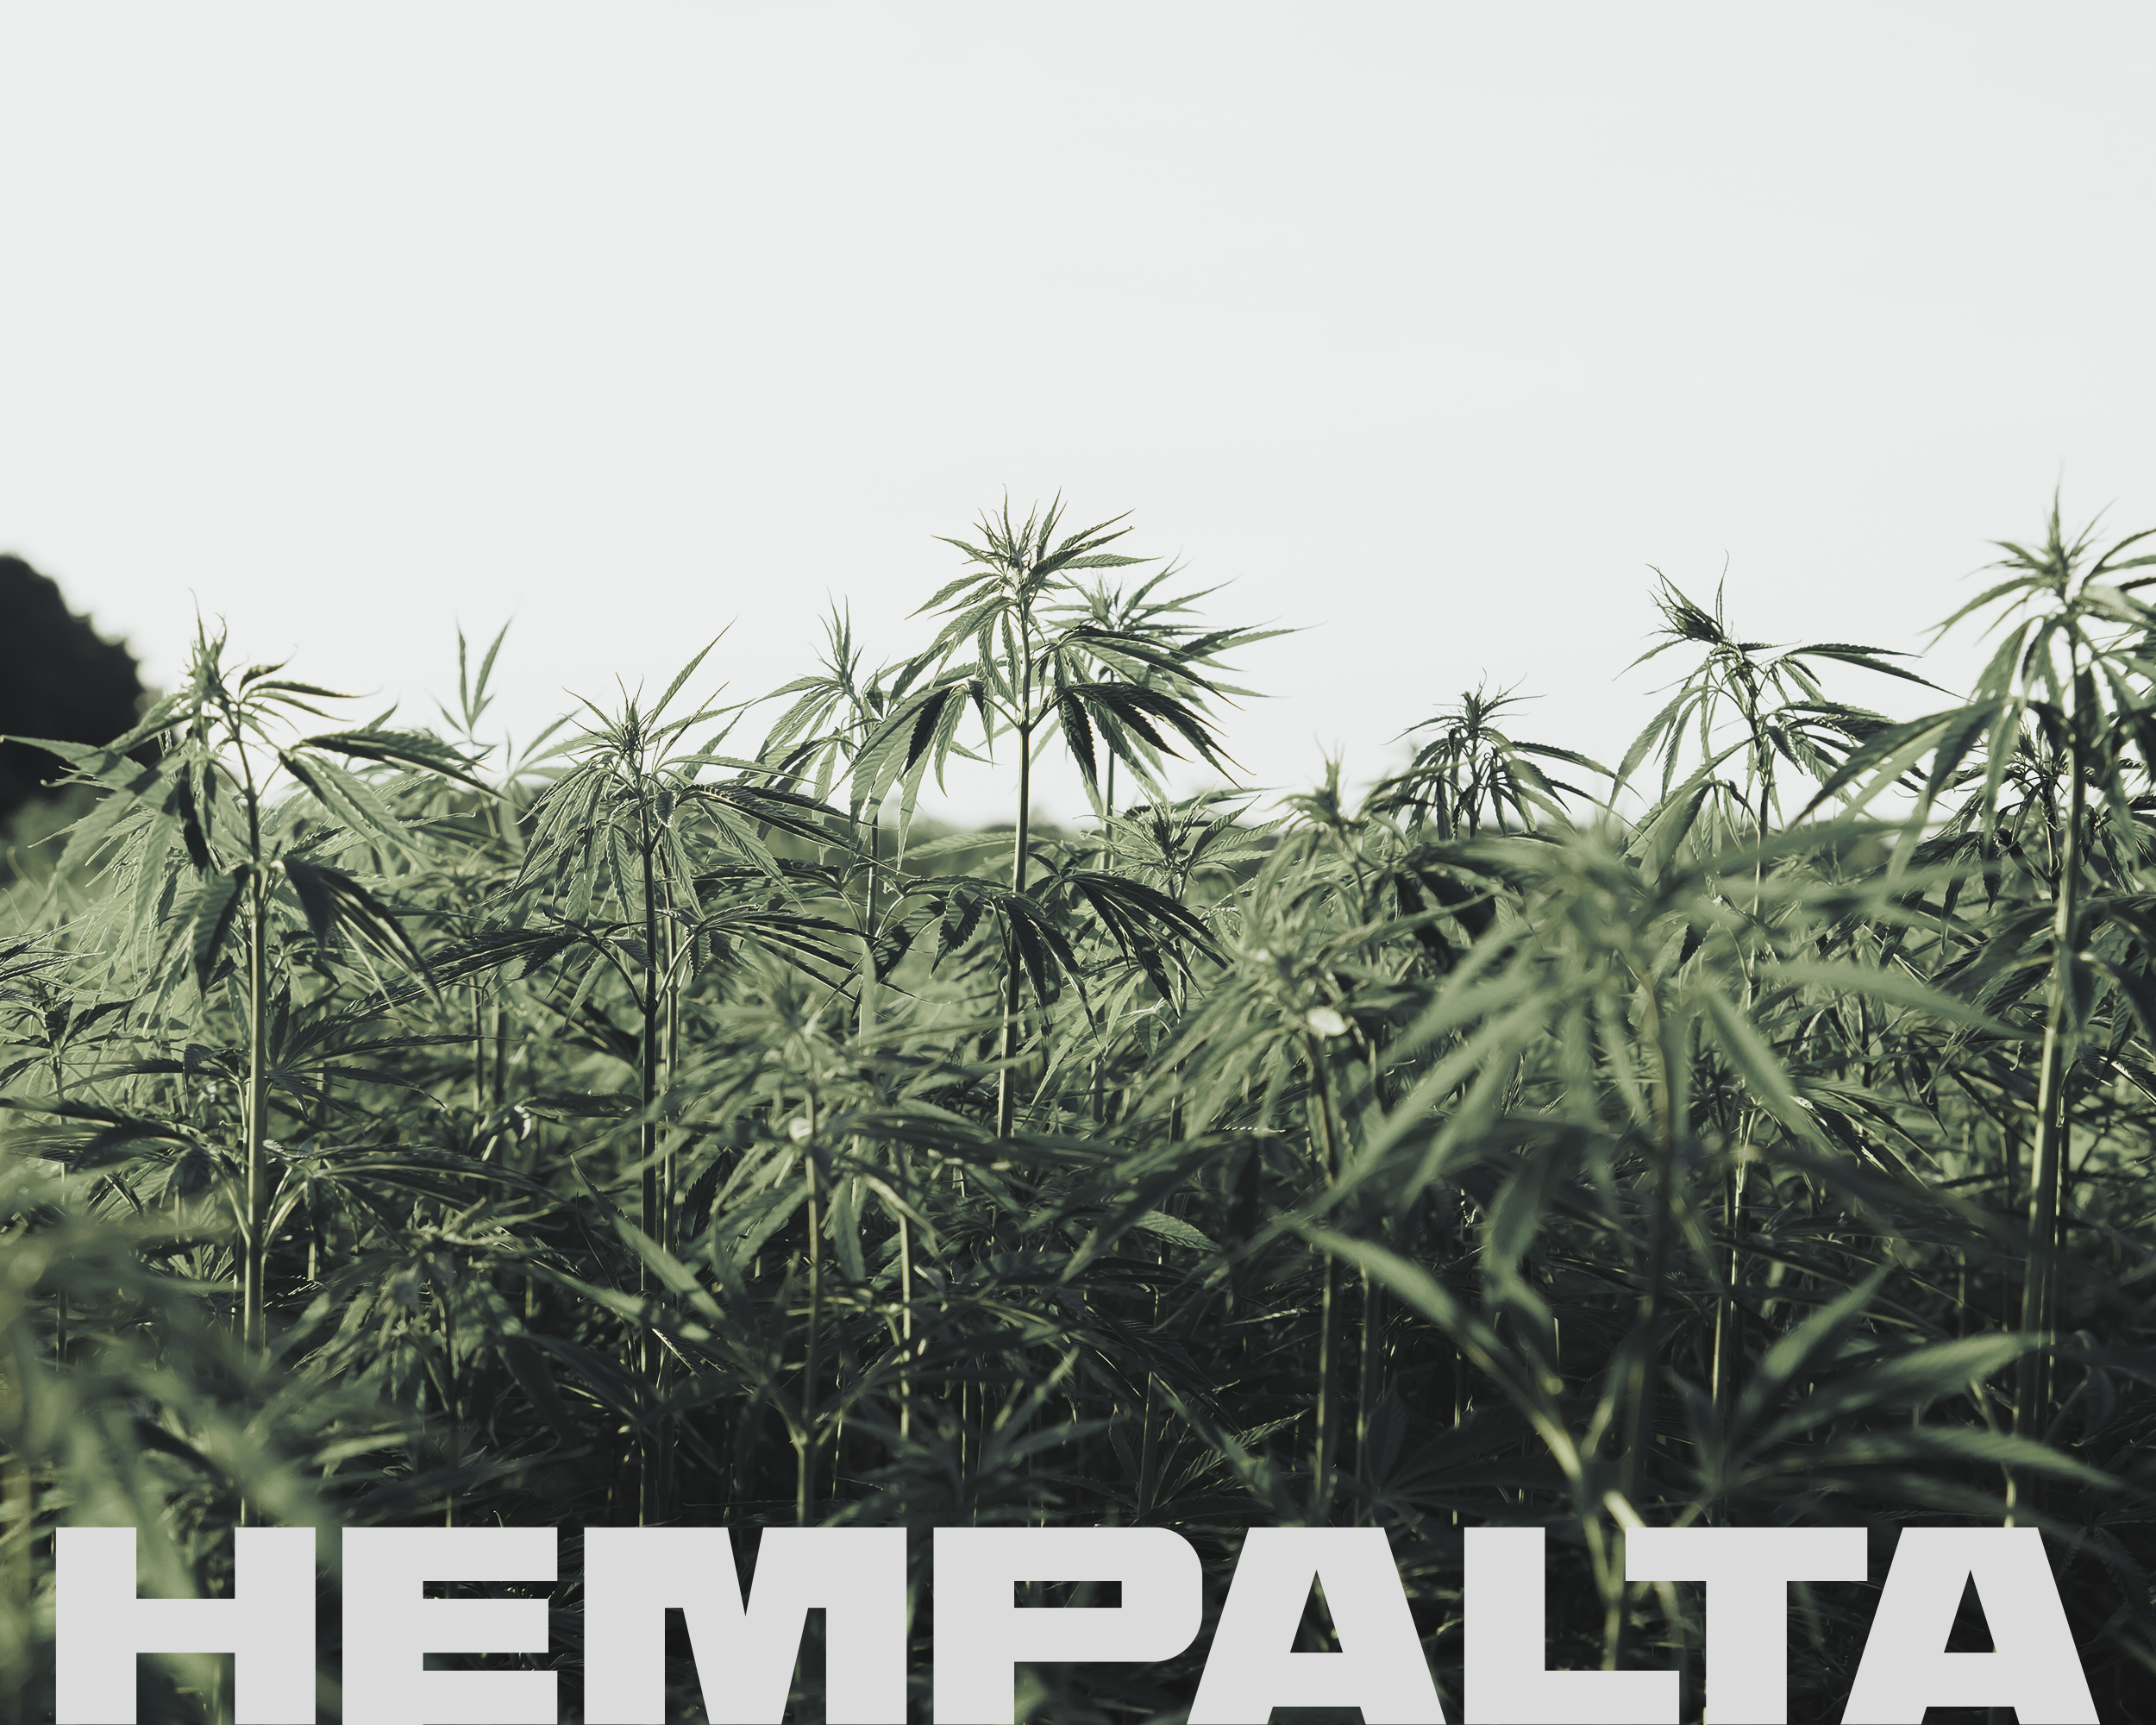 Hempalta logo on background of hemp plants